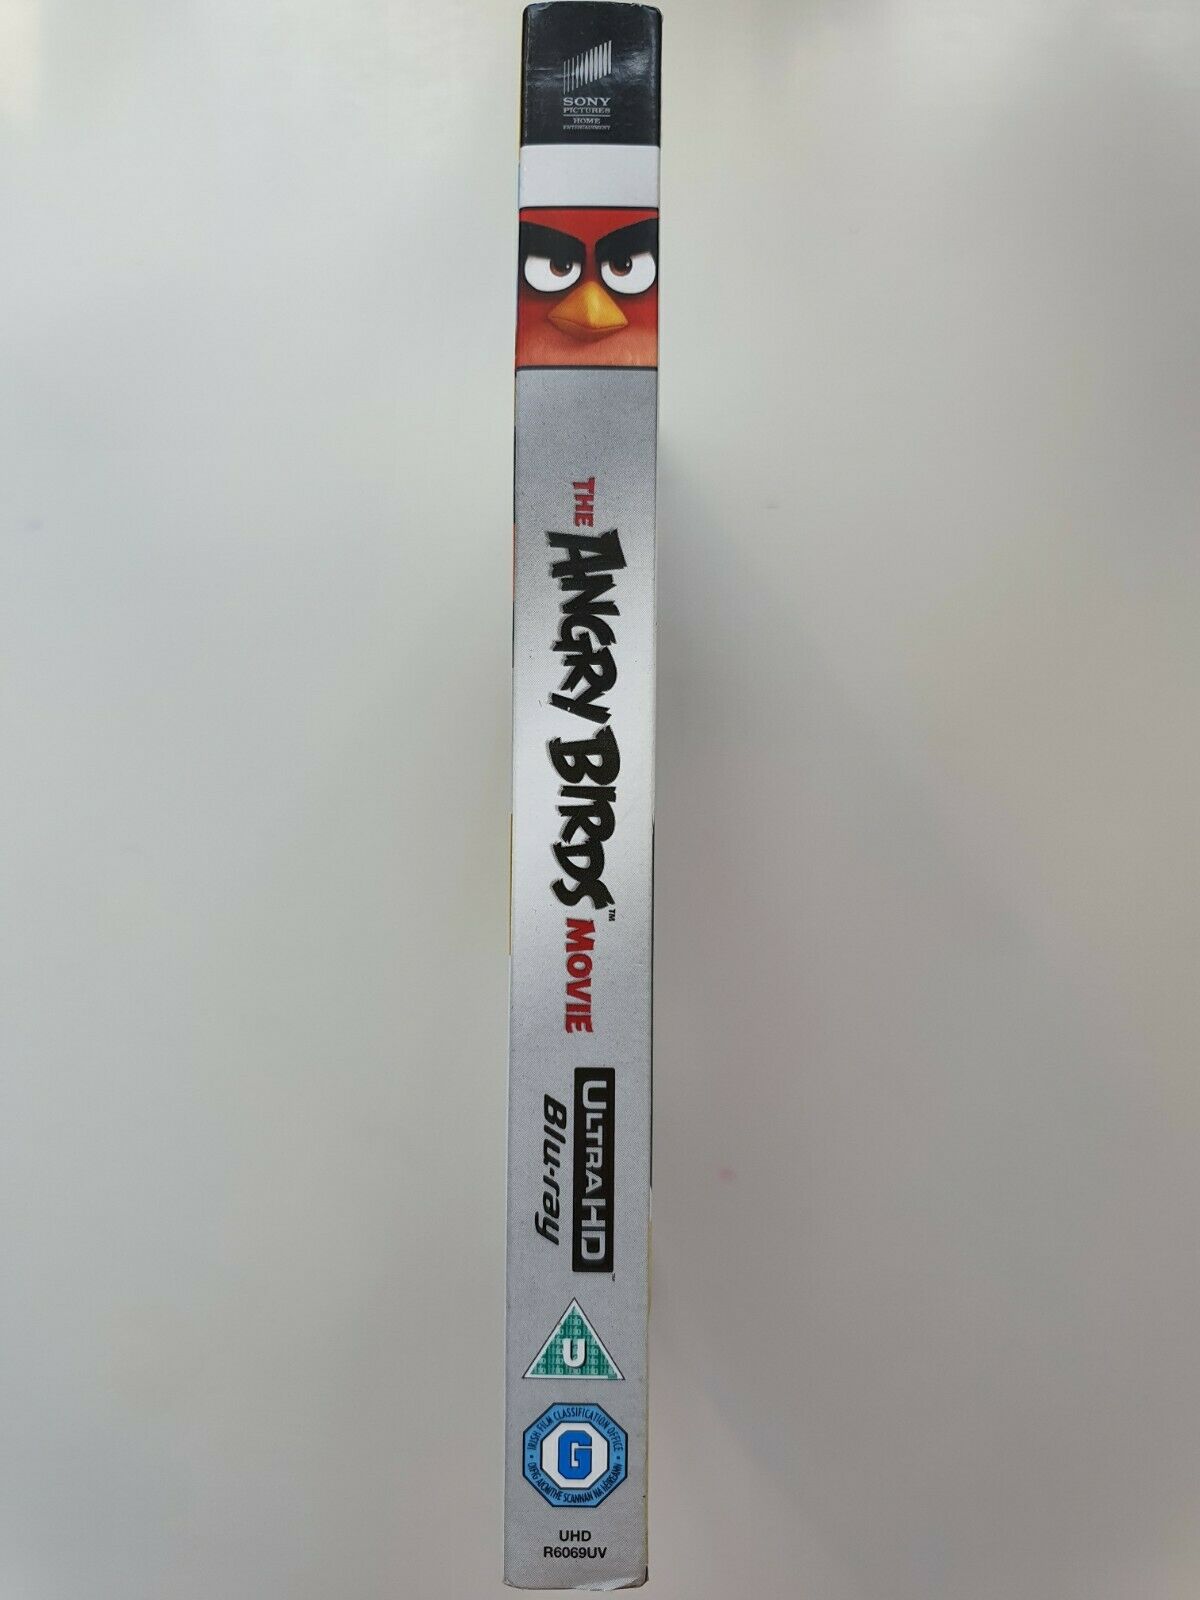 5050630606993 The Angry Birds Movie 4K UHD + Blu-Ray +Digital 2016 C. Kaytis 2 discs LIKE NEW